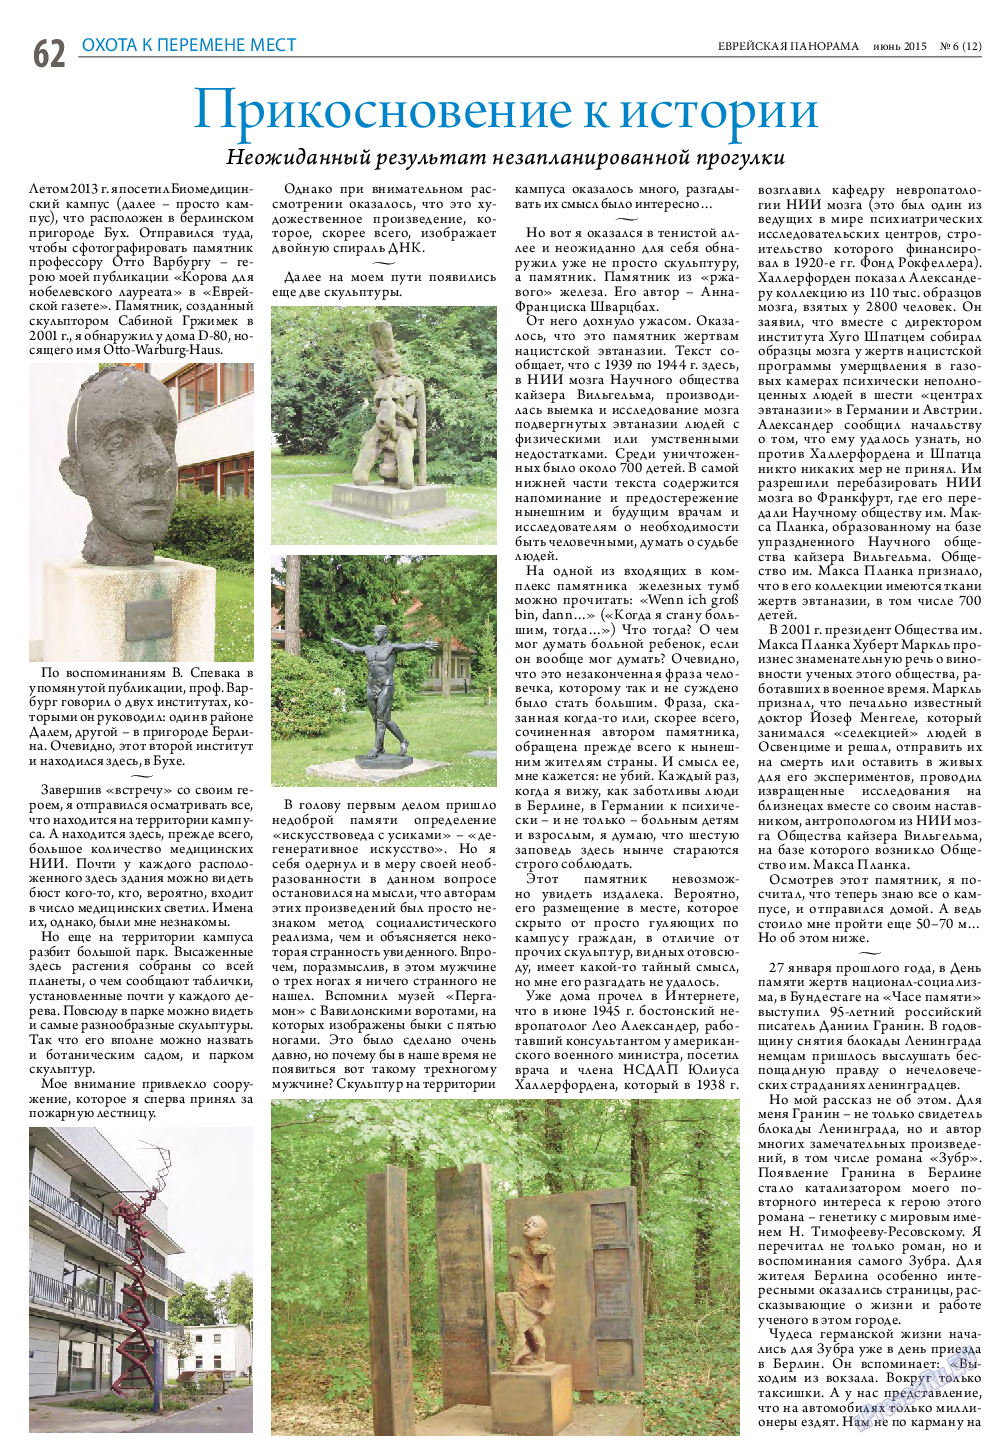 Еврейская панорама, газета. 2015 №6 стр.62